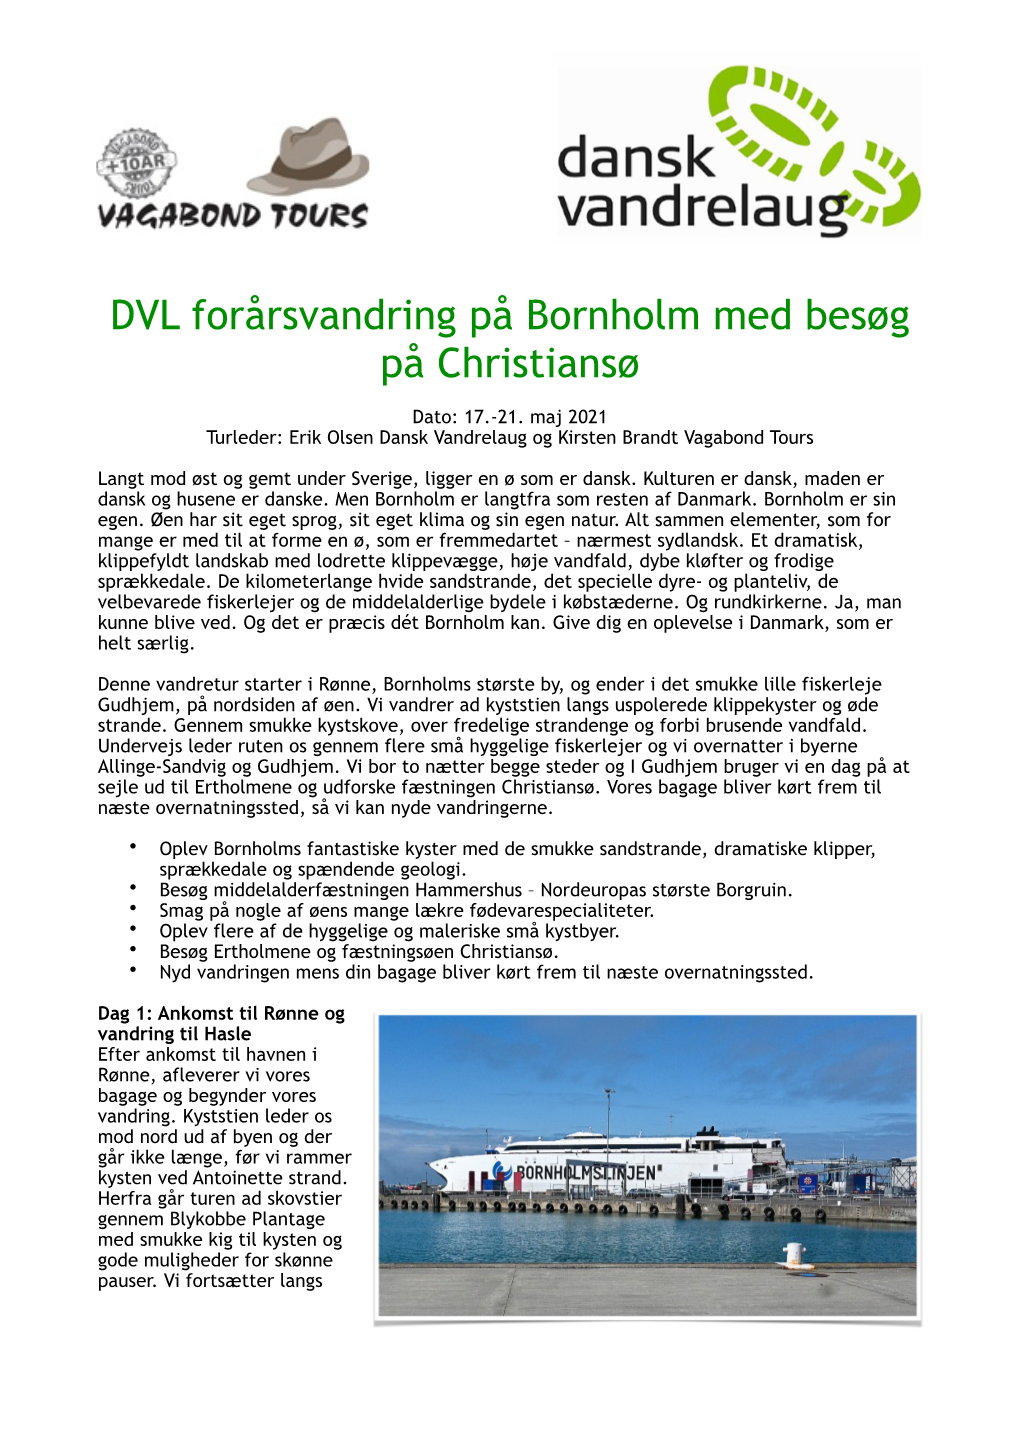 DVL Forårsvandring På Bornholm Med Besøg På Christiansø